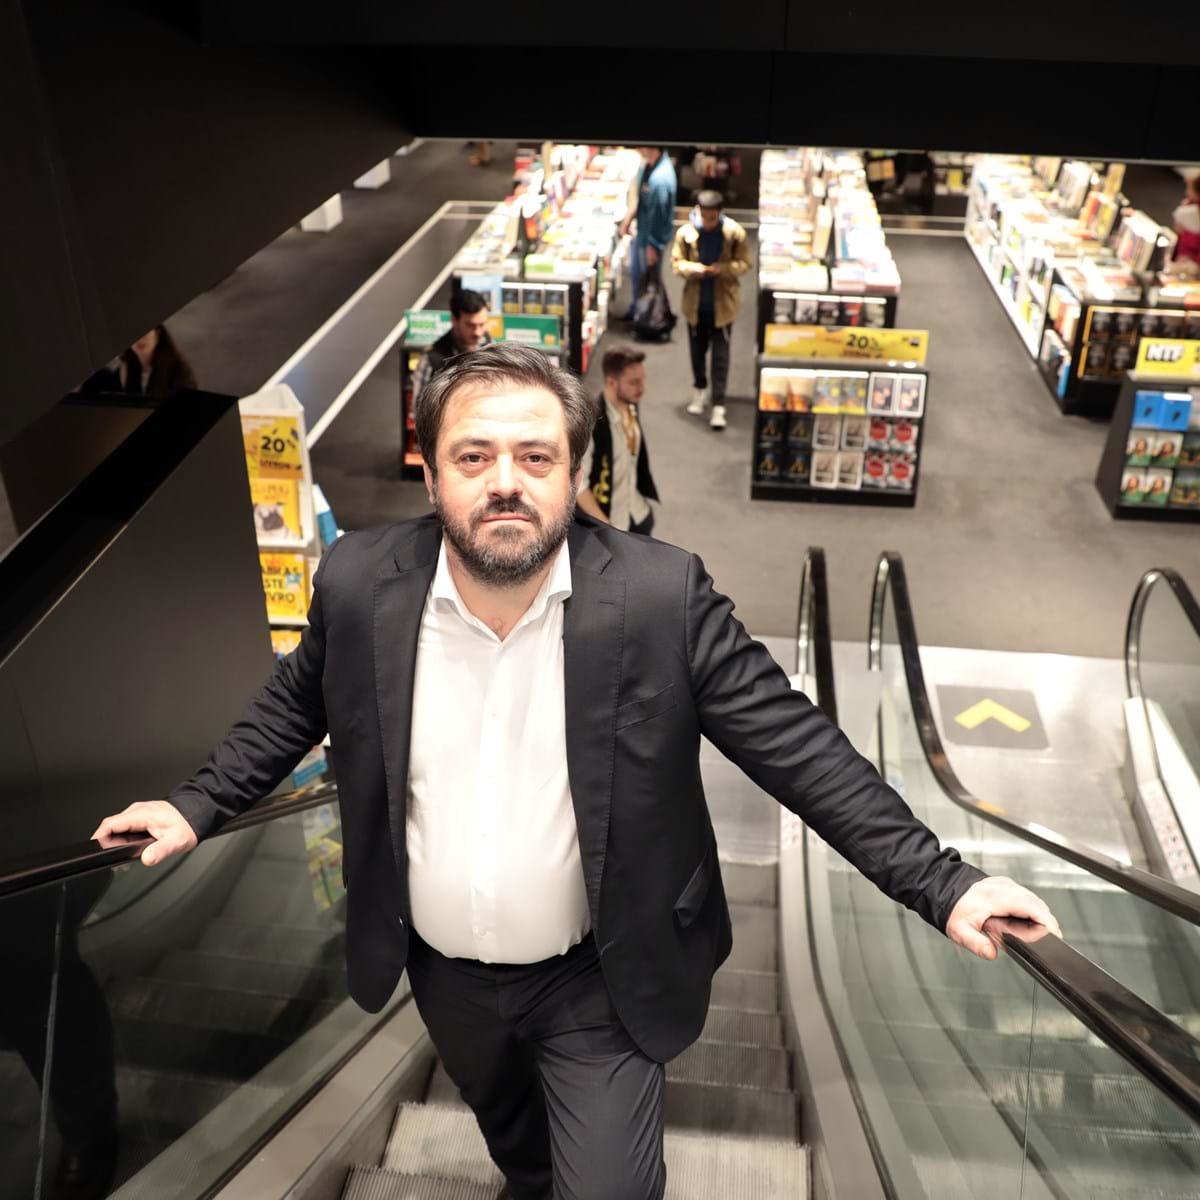 MediaMarkt diz adeus a Portugal. Fnac compra as dez lojas